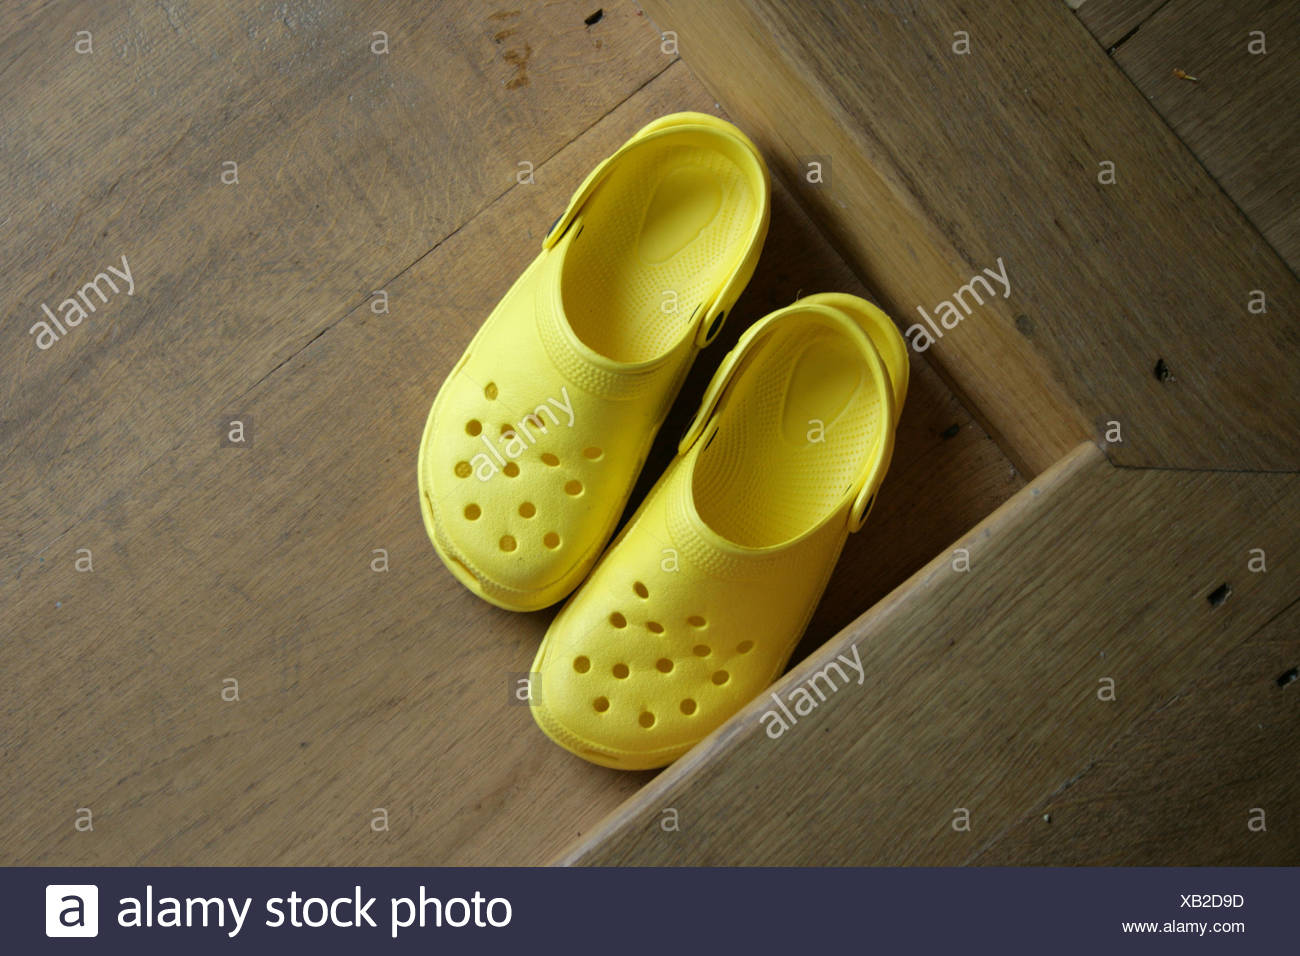 wooden crocs shoes